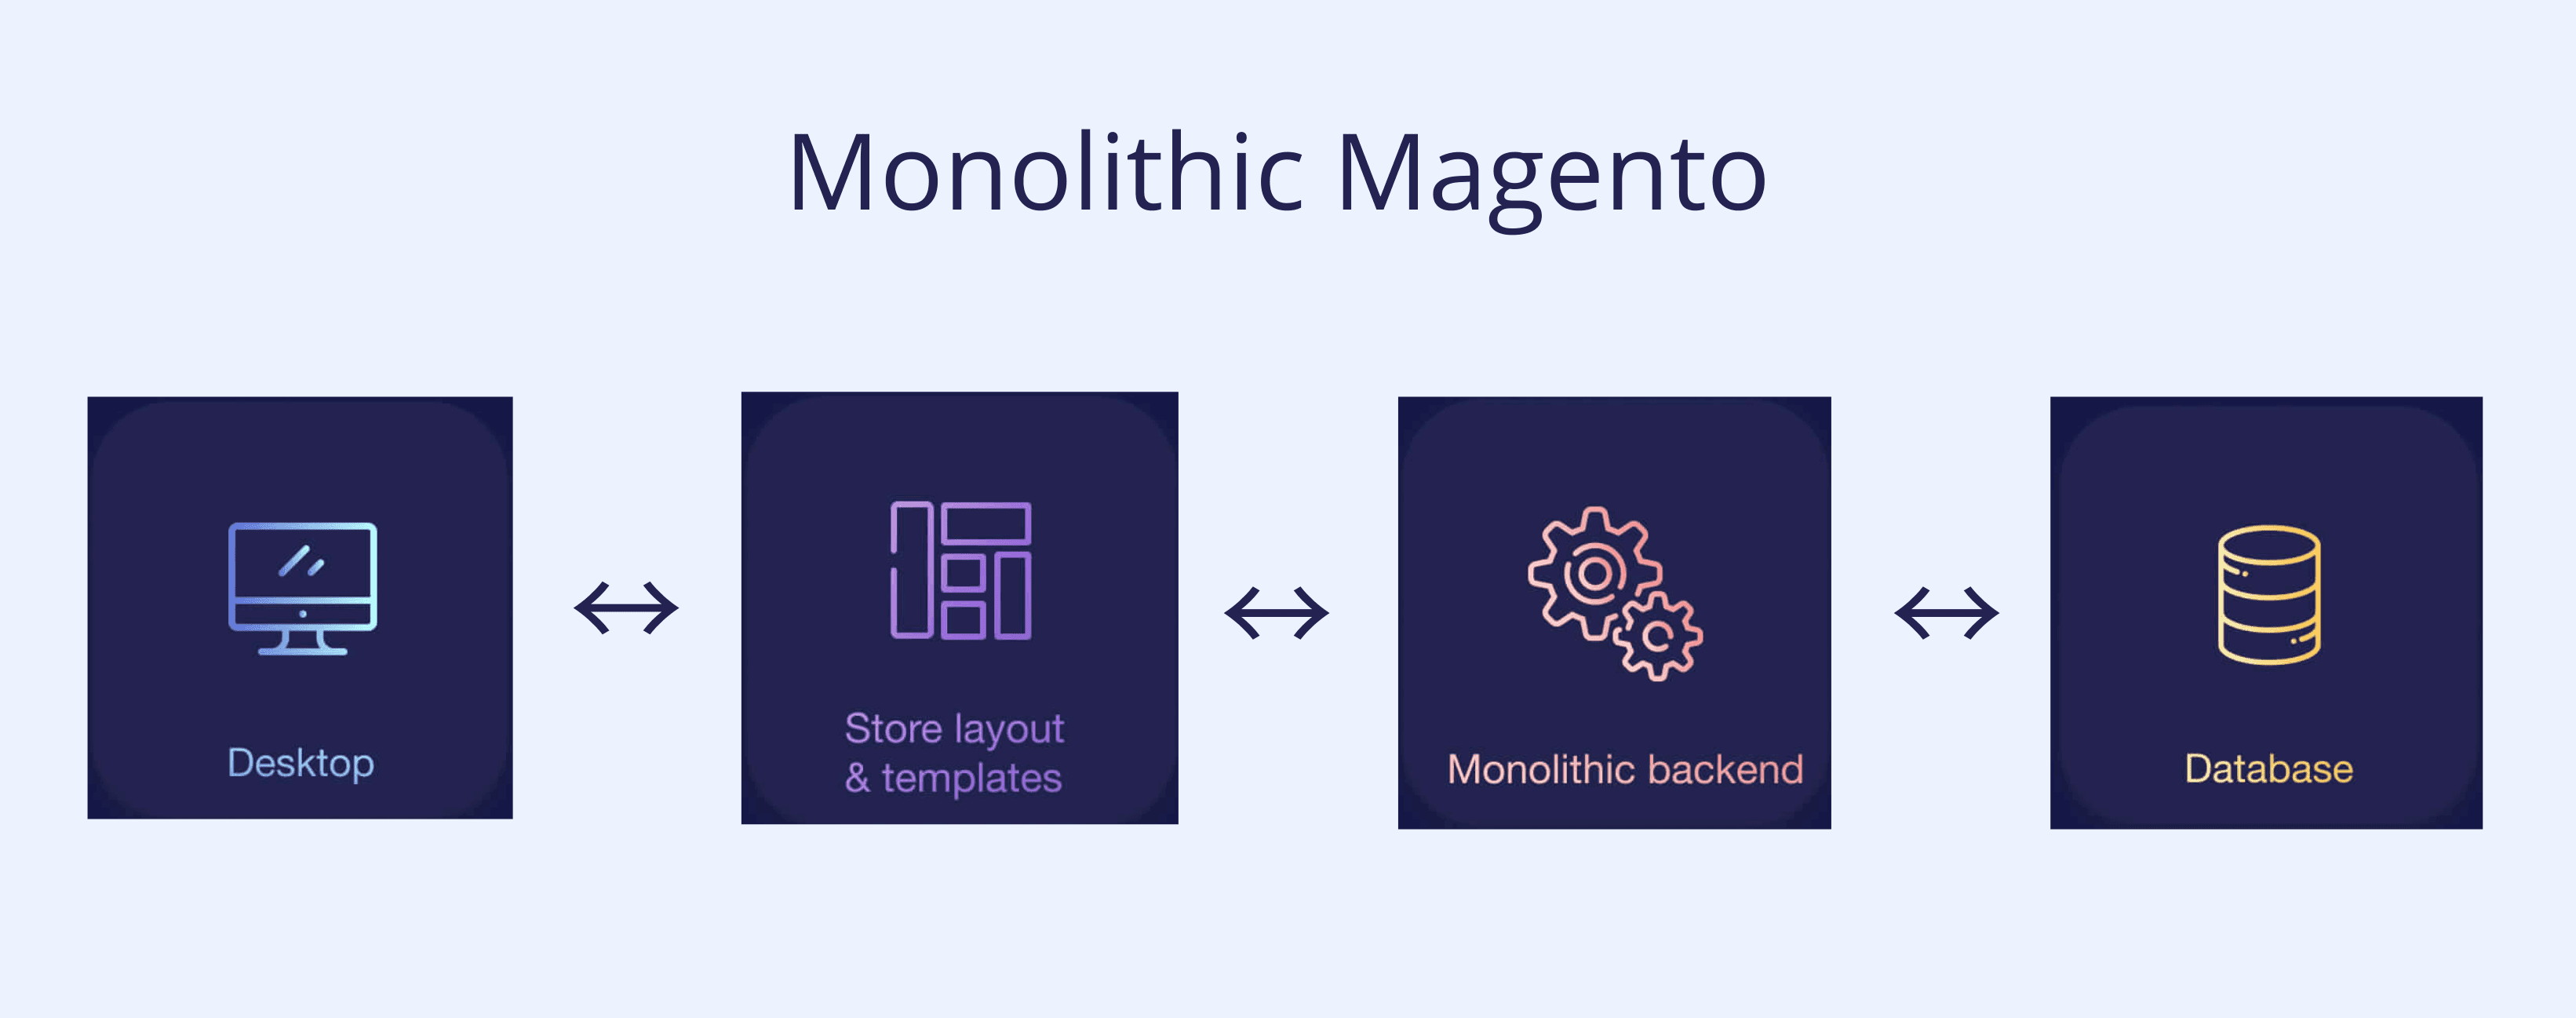 How Monolithic Magento Works